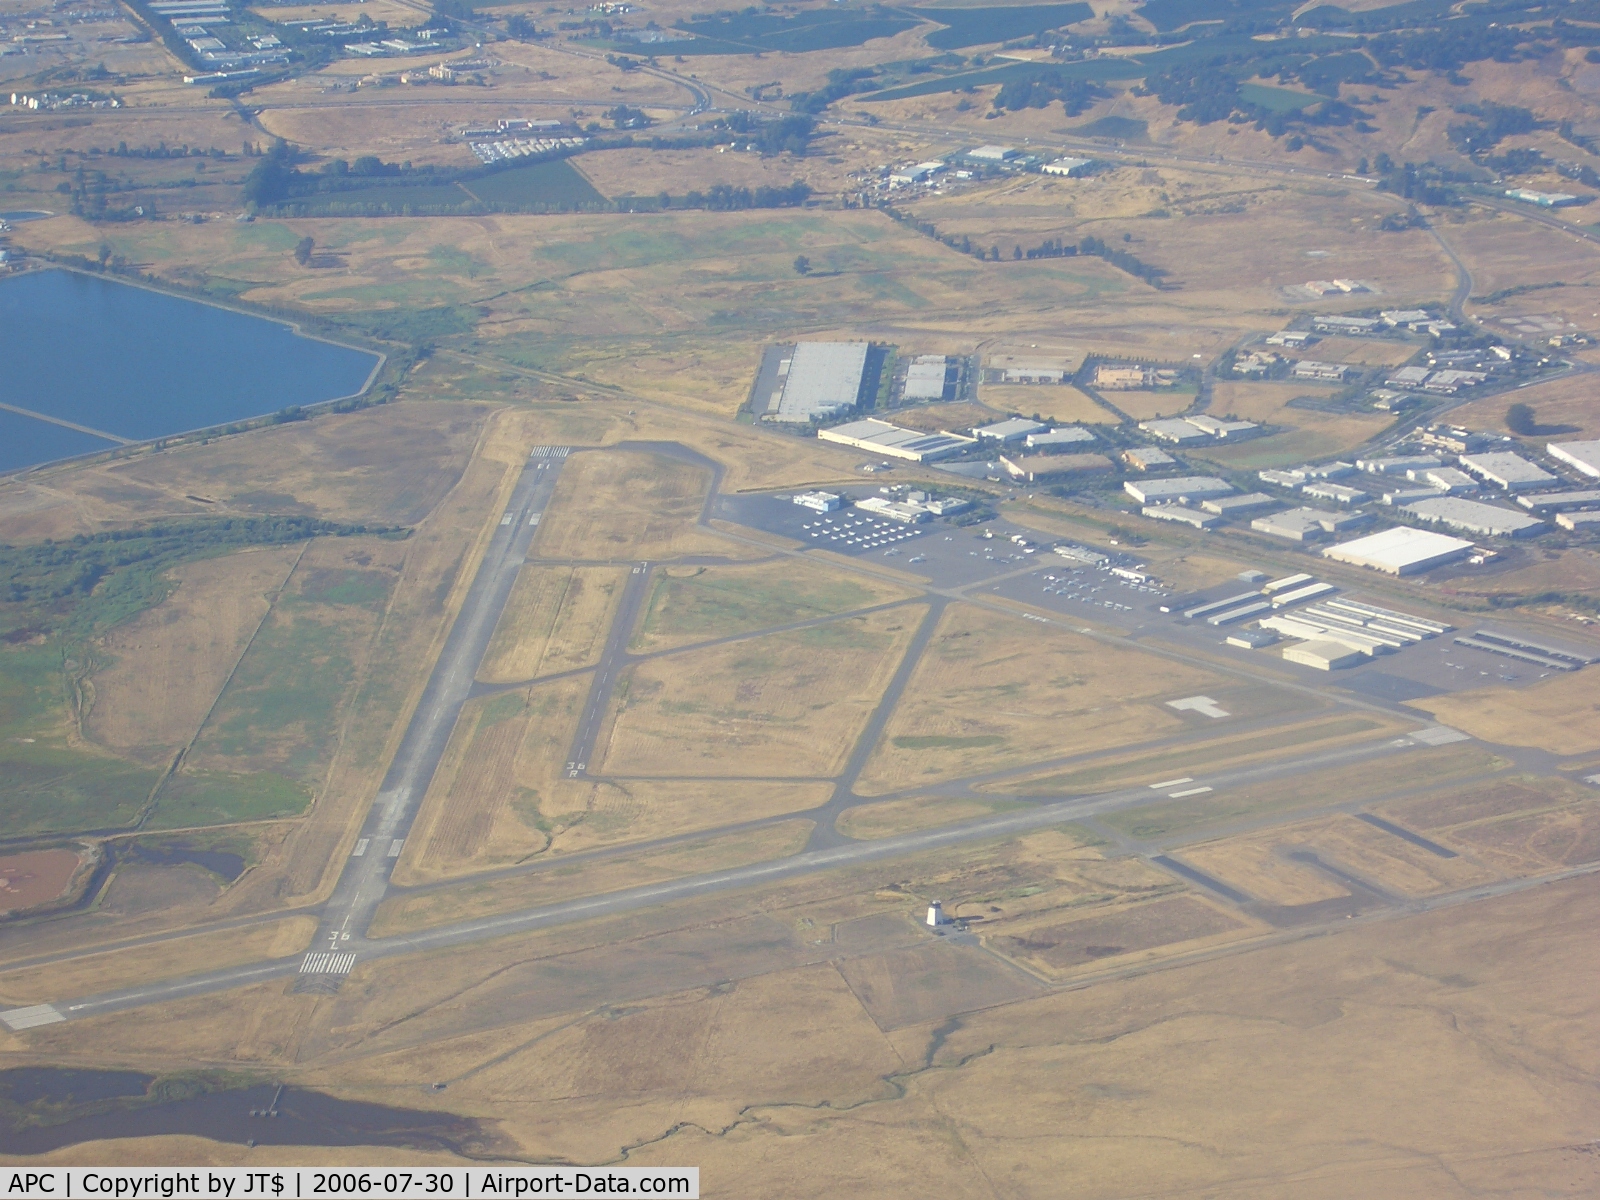 Napa County Airport (APC) - Aerial view of Napa County Airport